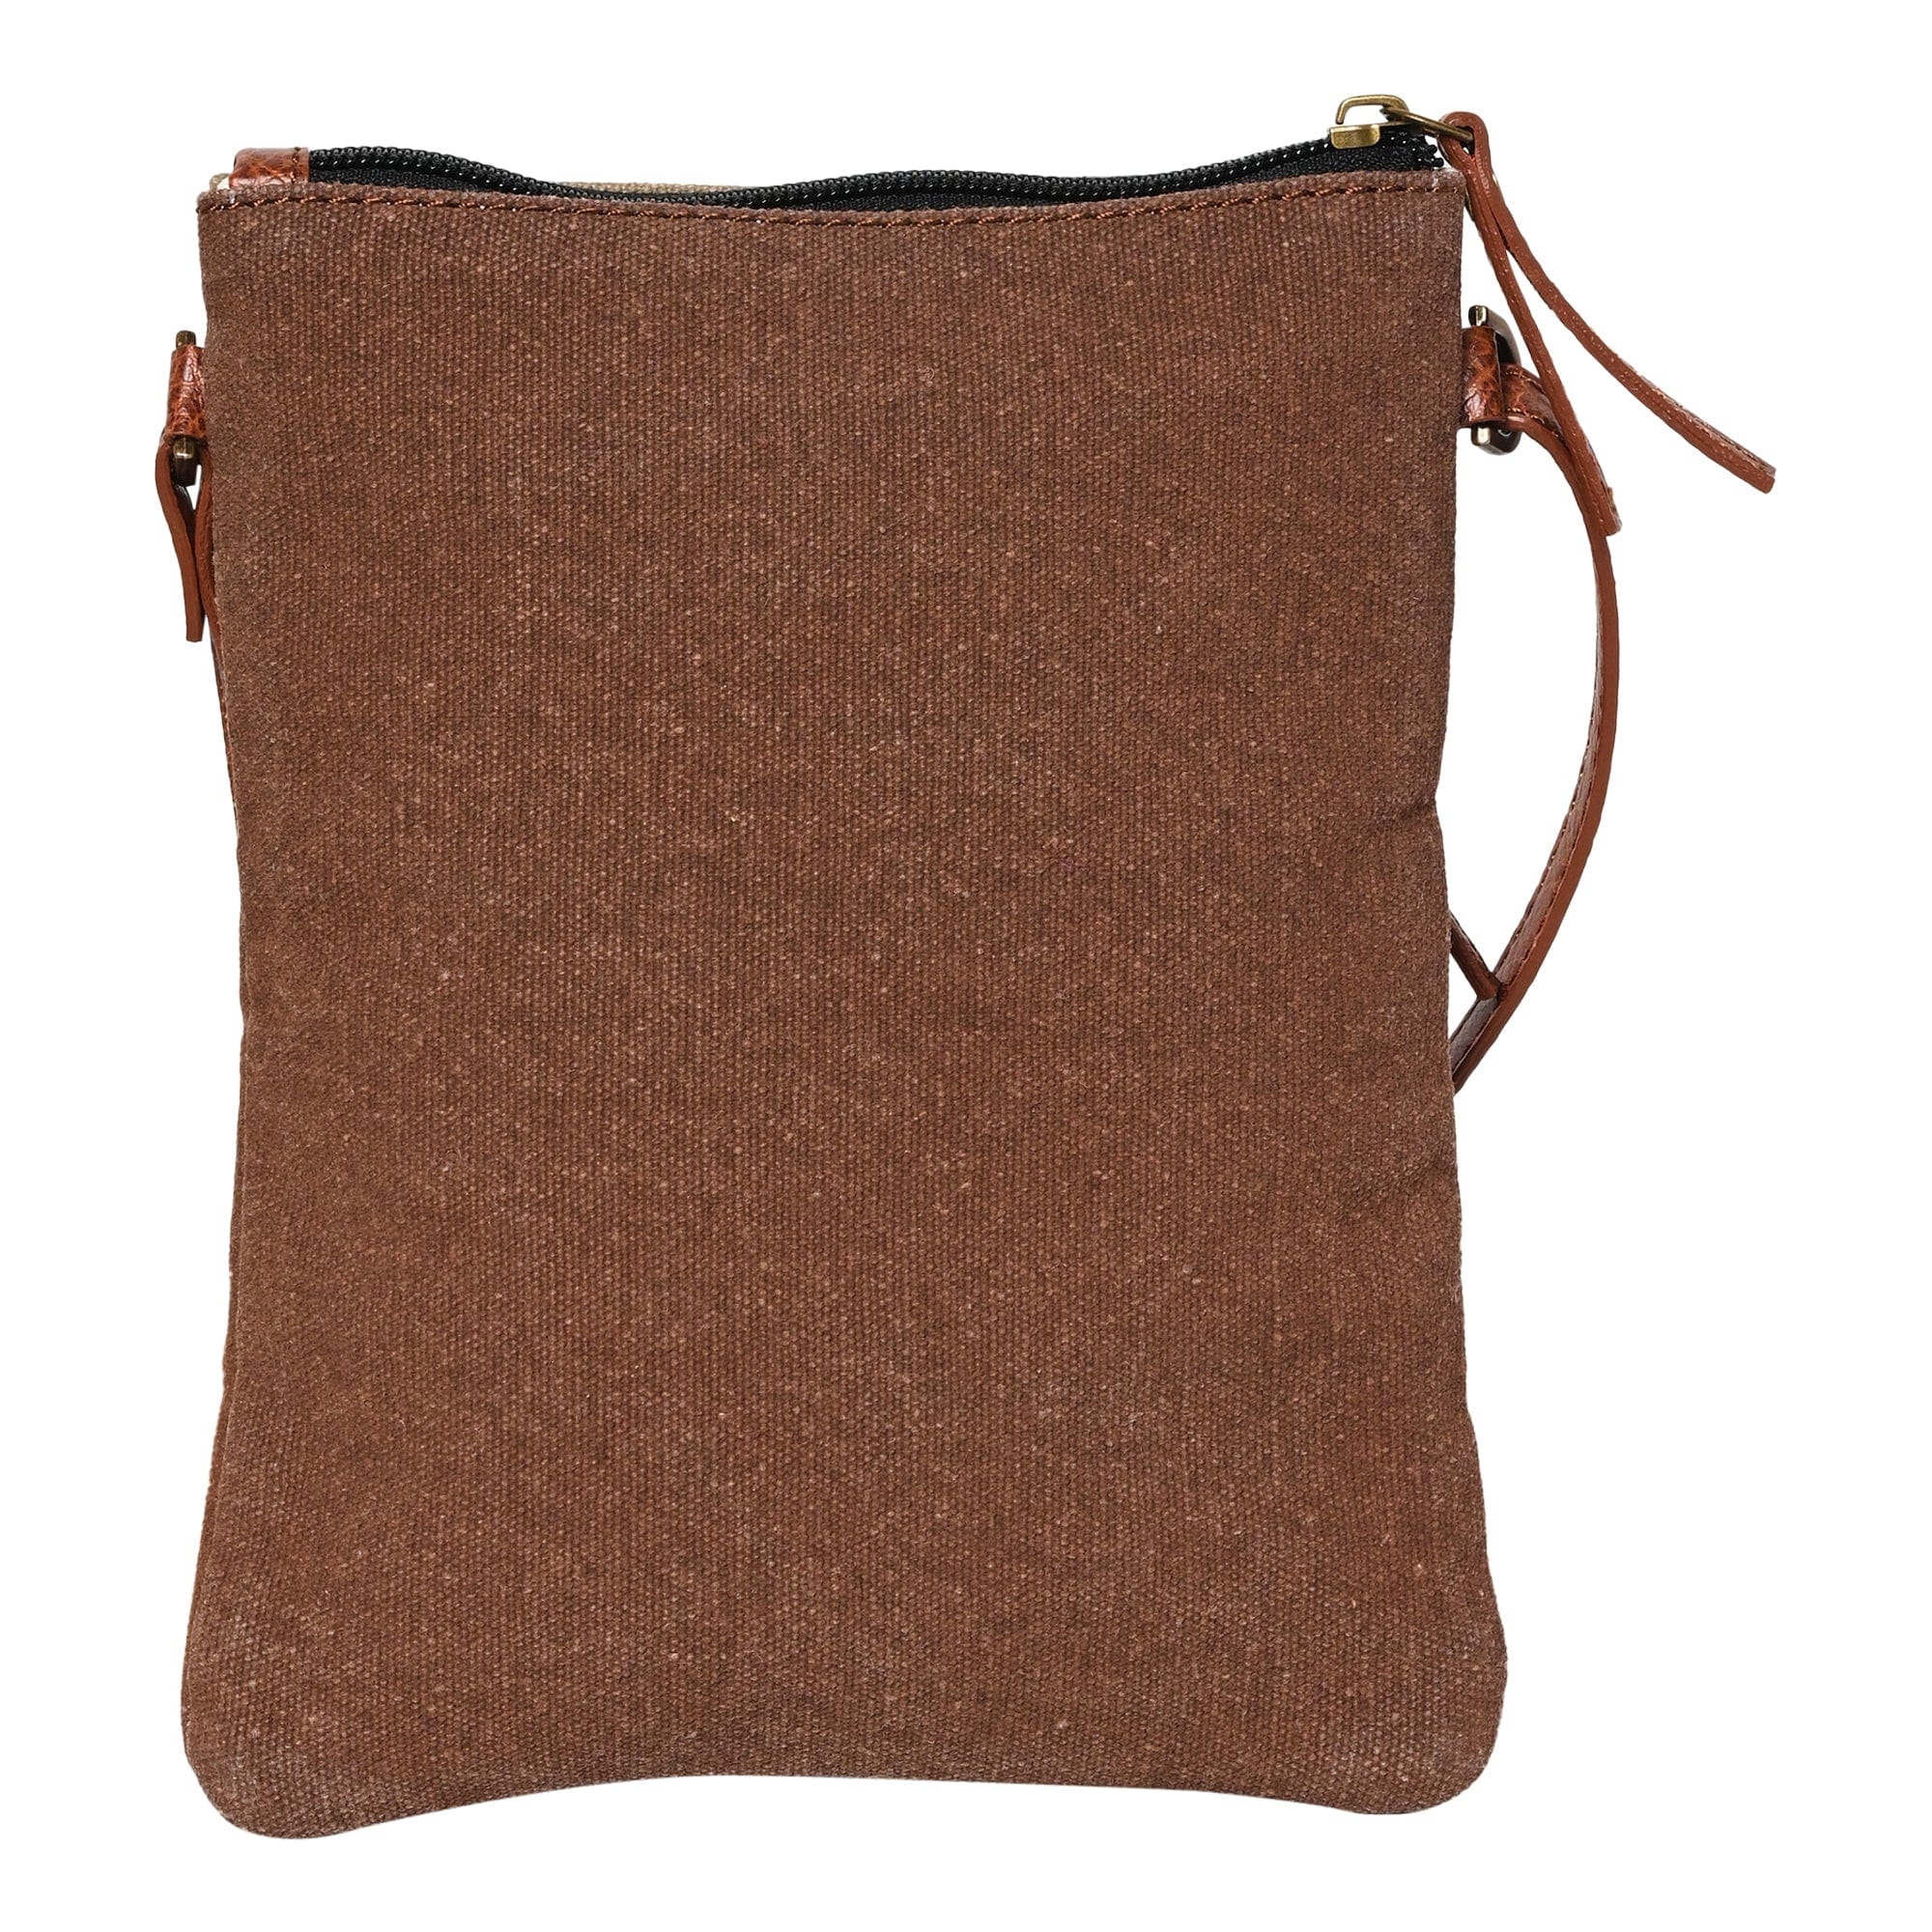 Mona B Small Messenger Crossbody Bag with Stylish Design for Girls and Women: Chocolate - (M-2515) - Crossbody Sling Bag by Mona-B - EOSS